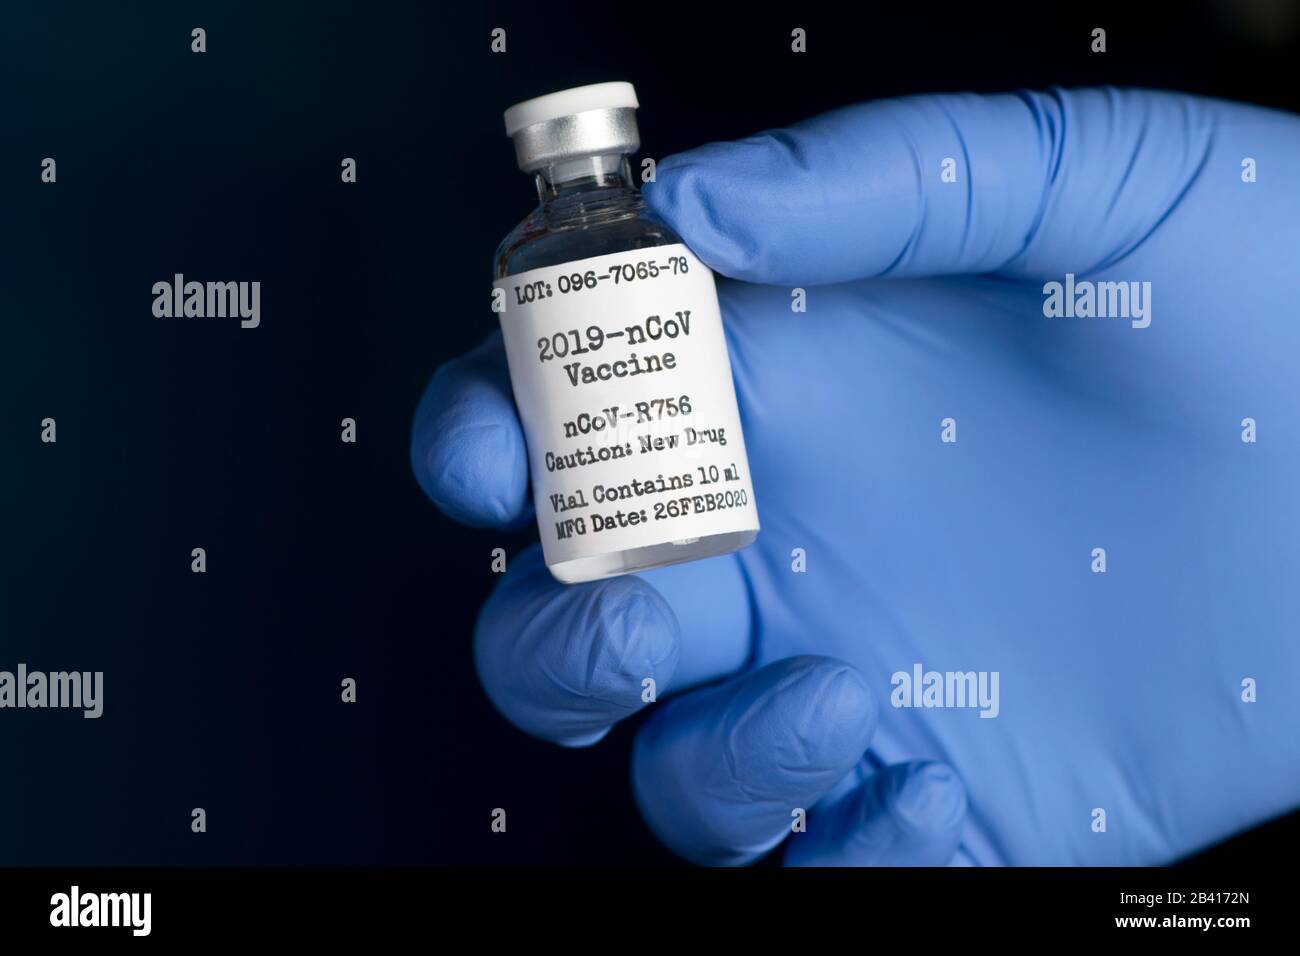 Corona virus 2019-nCoV vaccine vial in gloved hand of nurse on dark background. Stock Photo